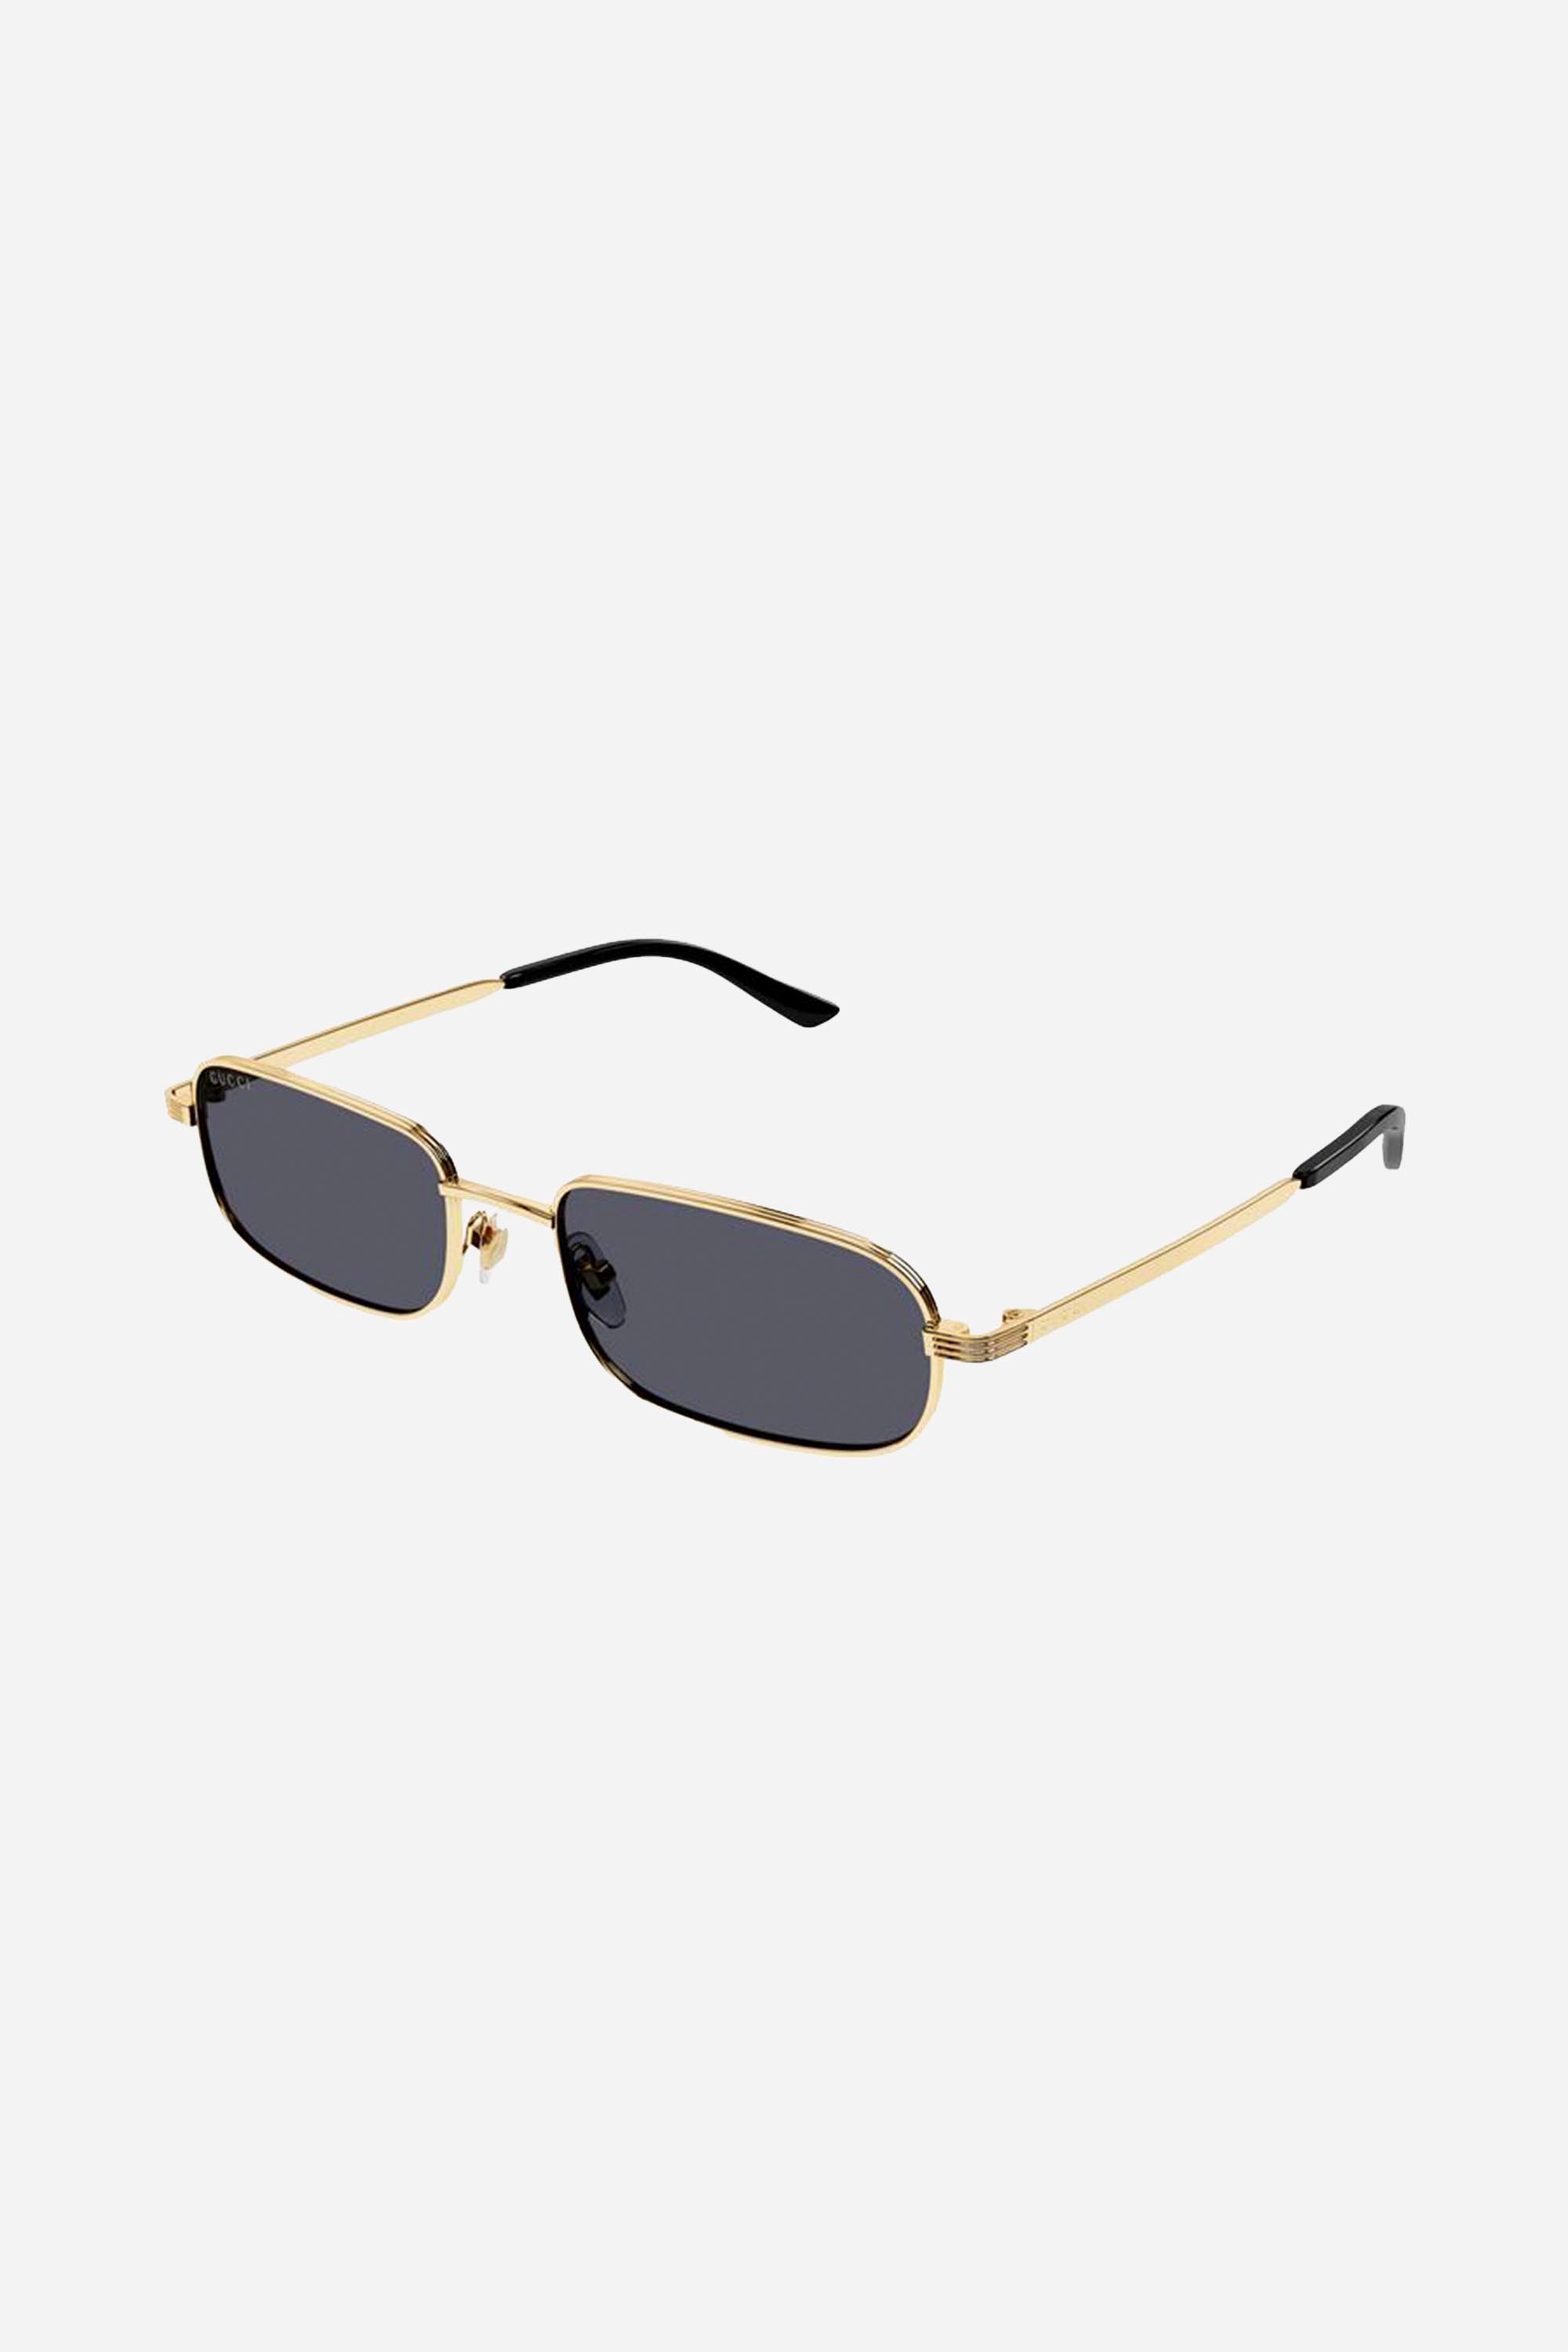 Gucci micro metal gold sunglasses - Eyewear Club